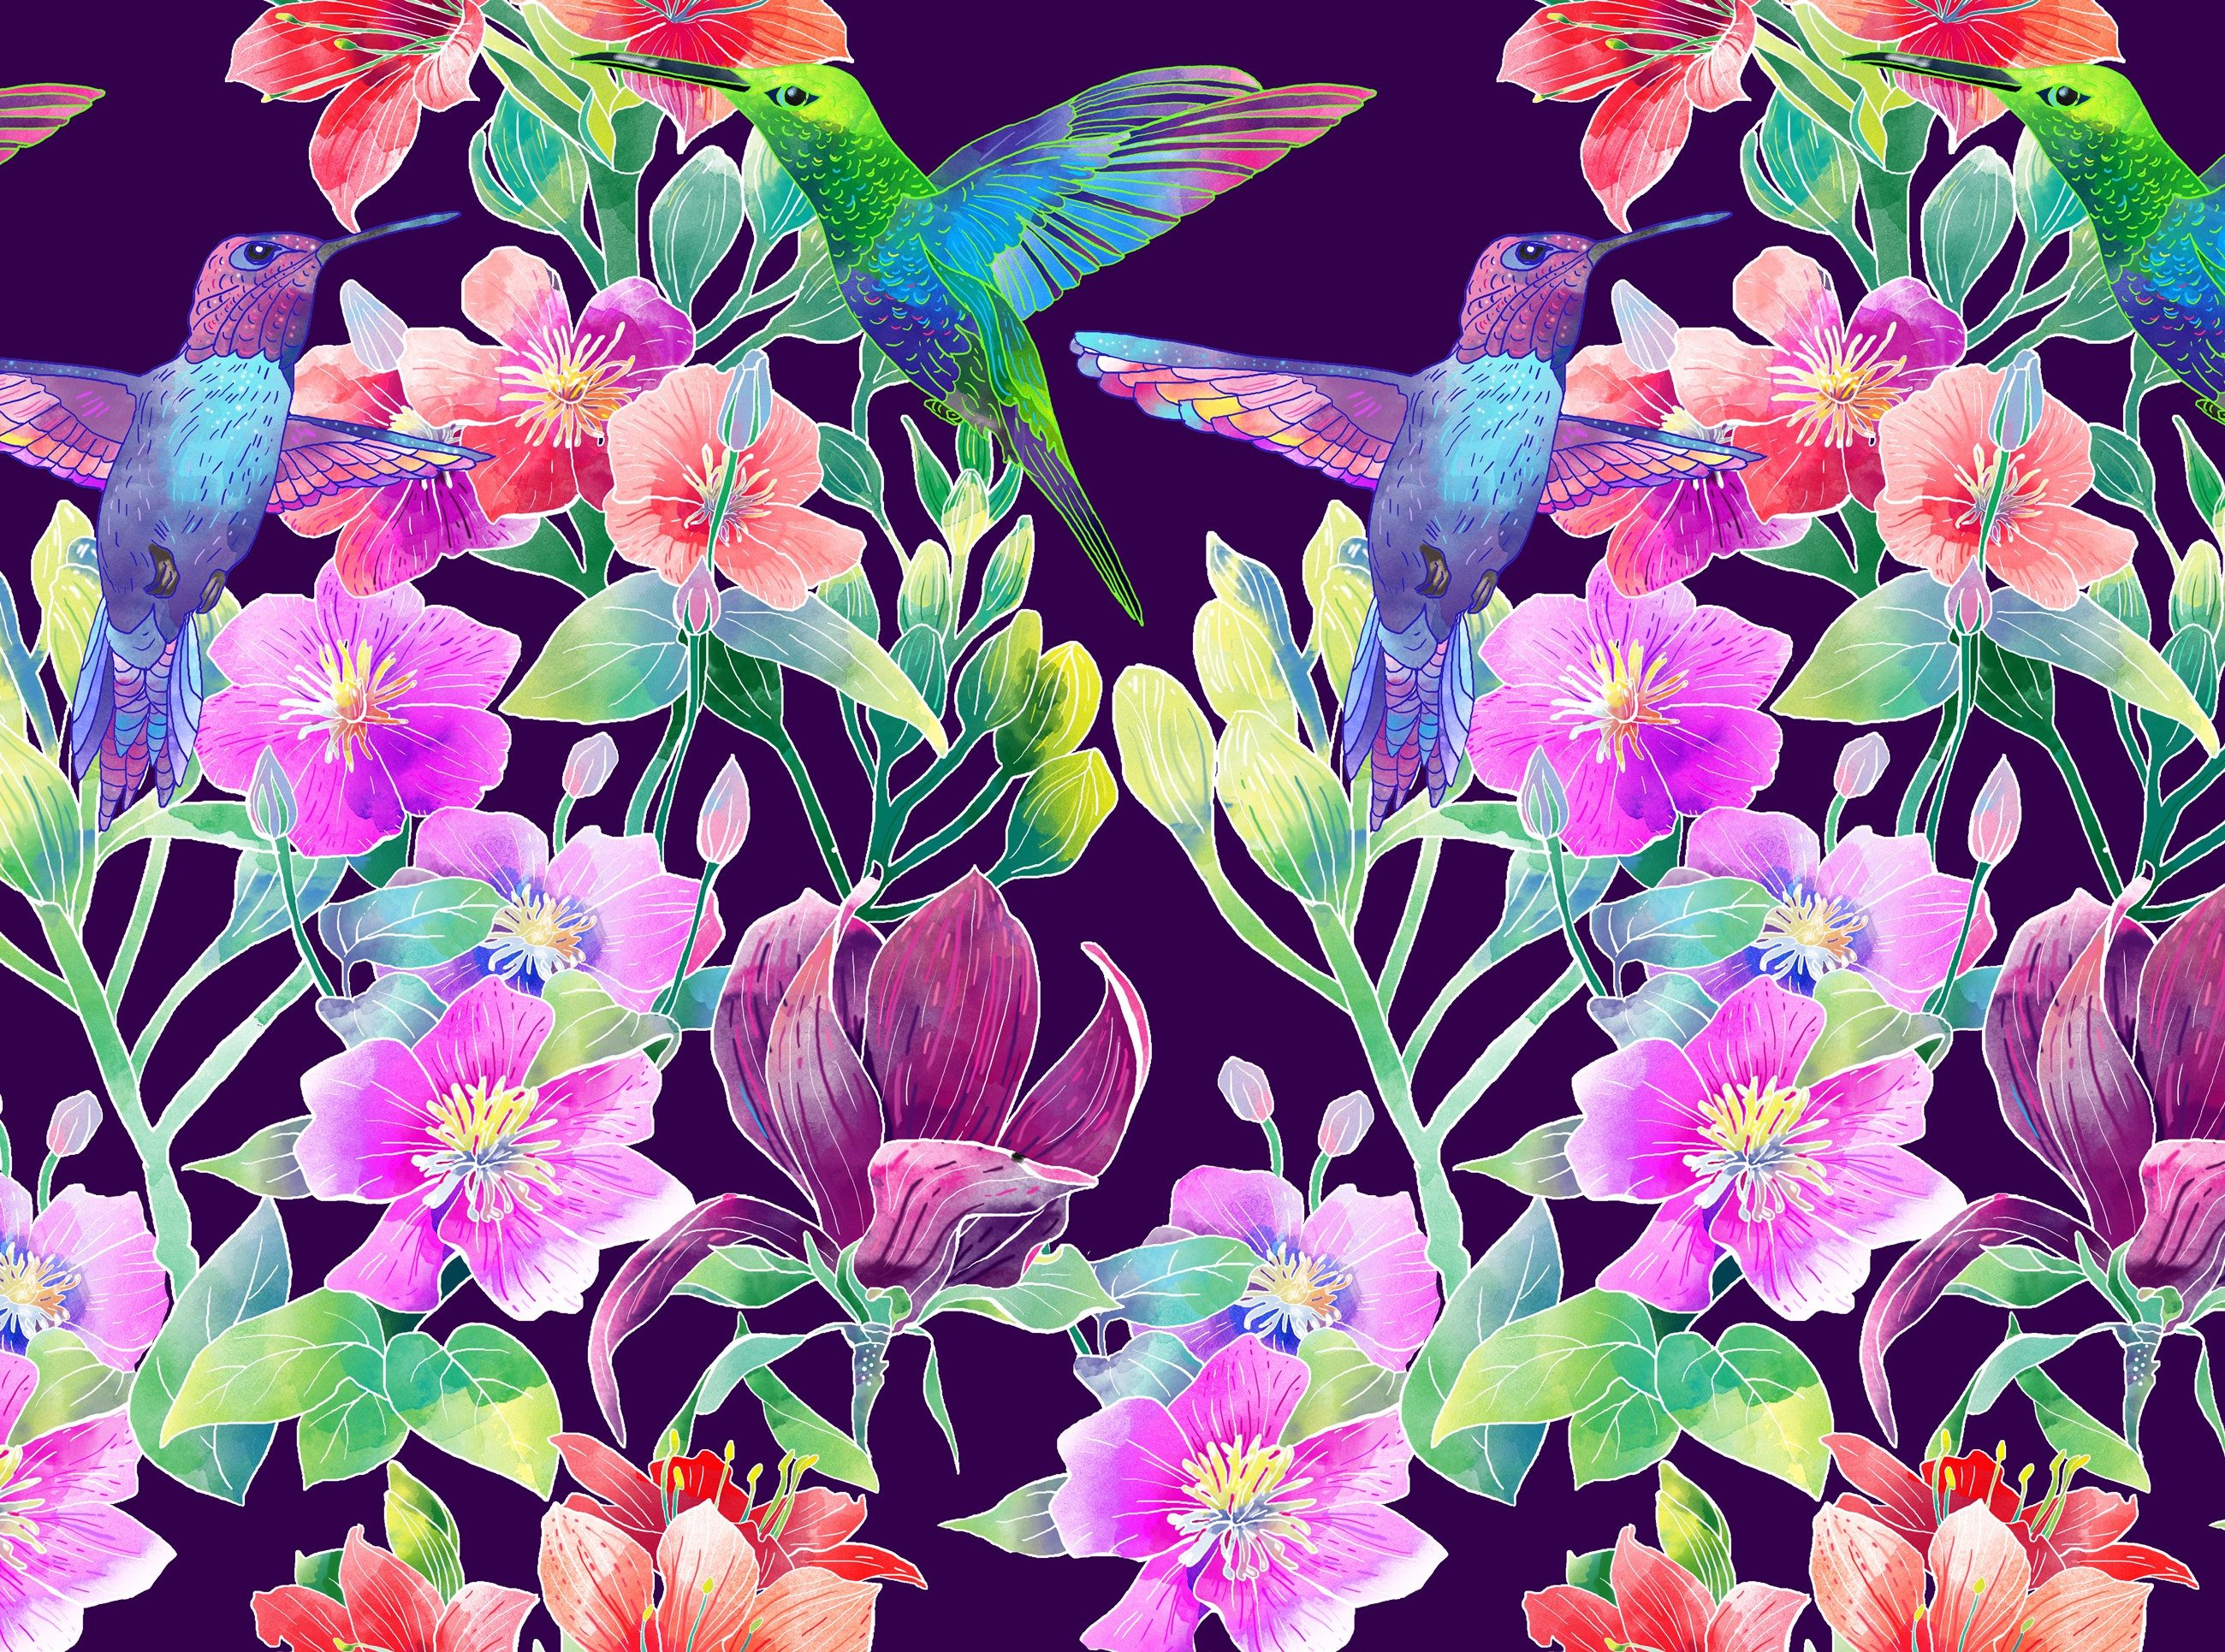 Papermoon Fototapete VLIES-Tapete Premium Frühling Natur Vogel Blumen Rosa Pink Lila Gelb, Kleister KOSTENLOS, reduziert, 3D-Effekt, restlos trocken abziehbar, (komplett Set inkl. Tapetenkleister, 9053), Wandtapete Bild Dekoration Wand-Dekor Motiv Tapete Poster